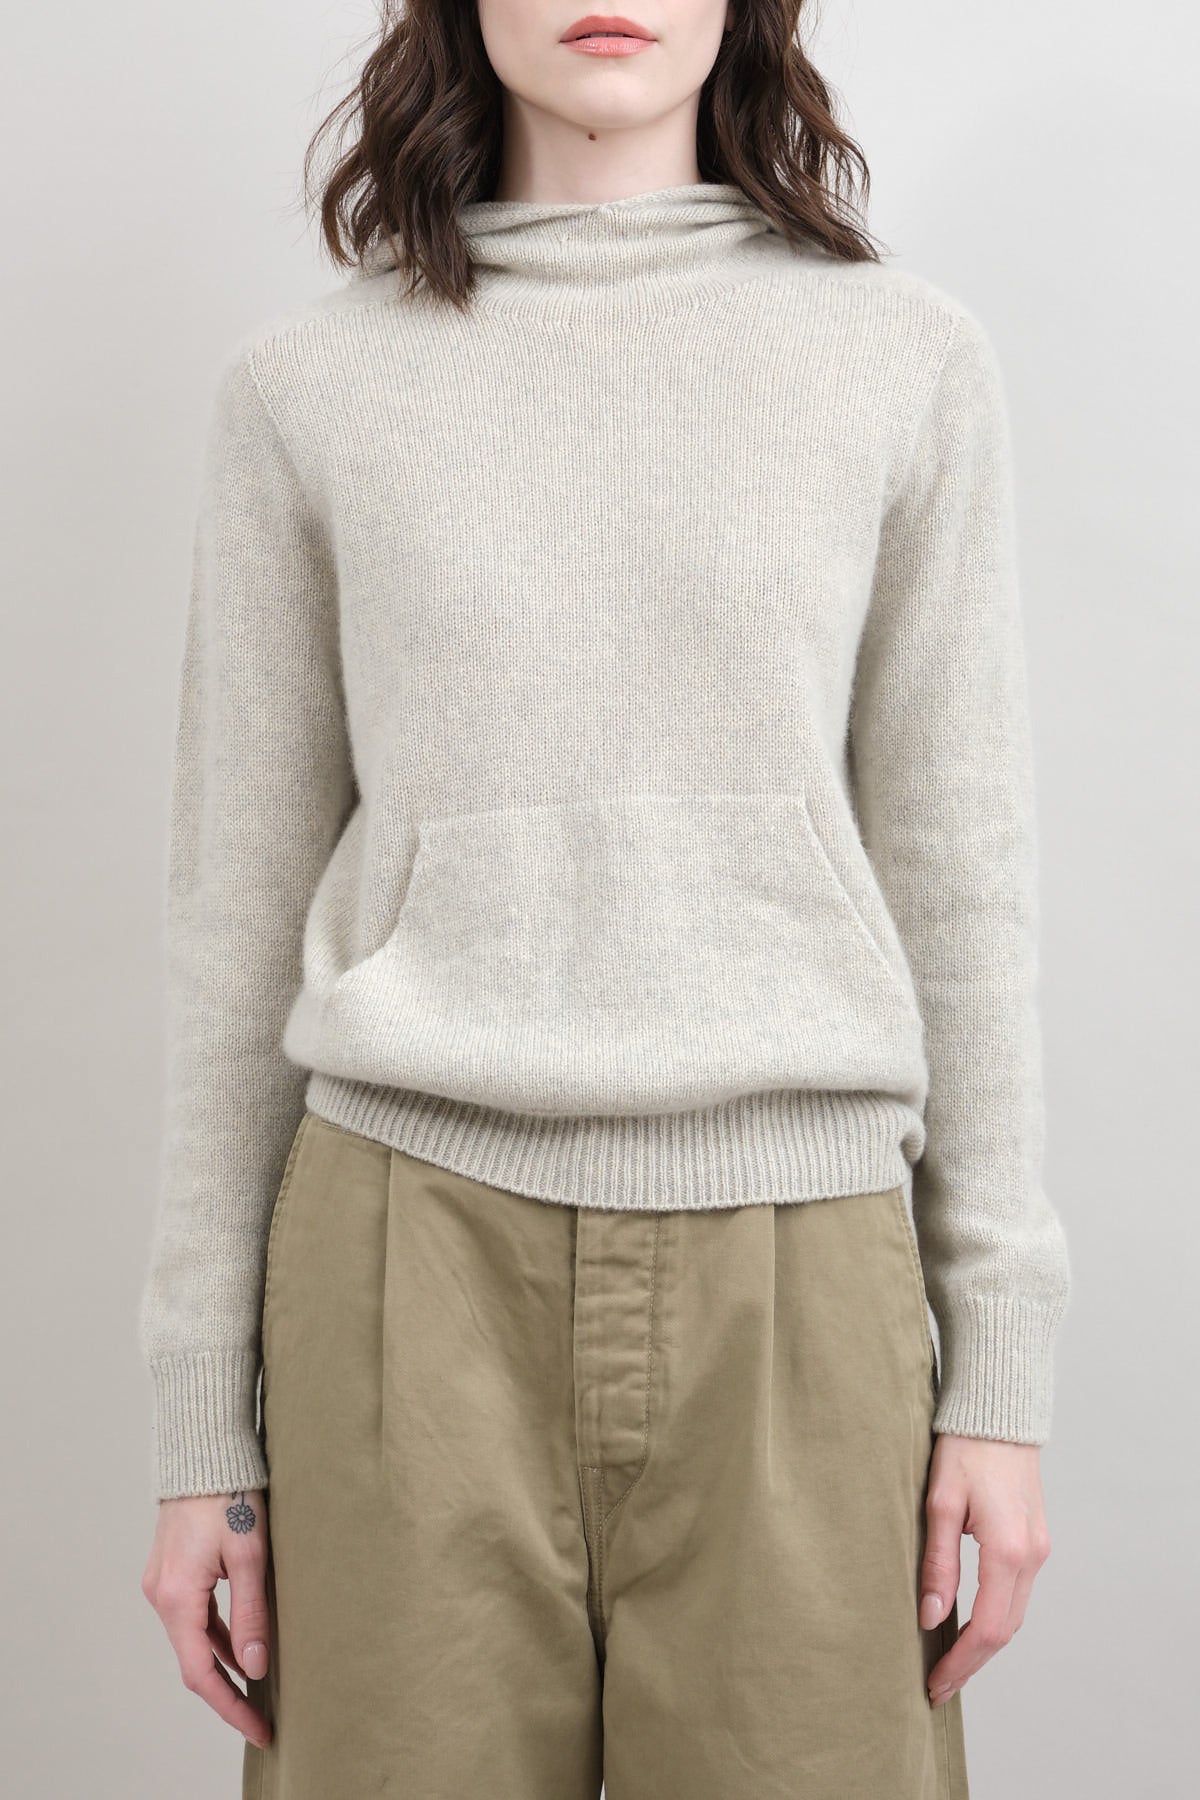 Evam Eva cashmere hooded sweater